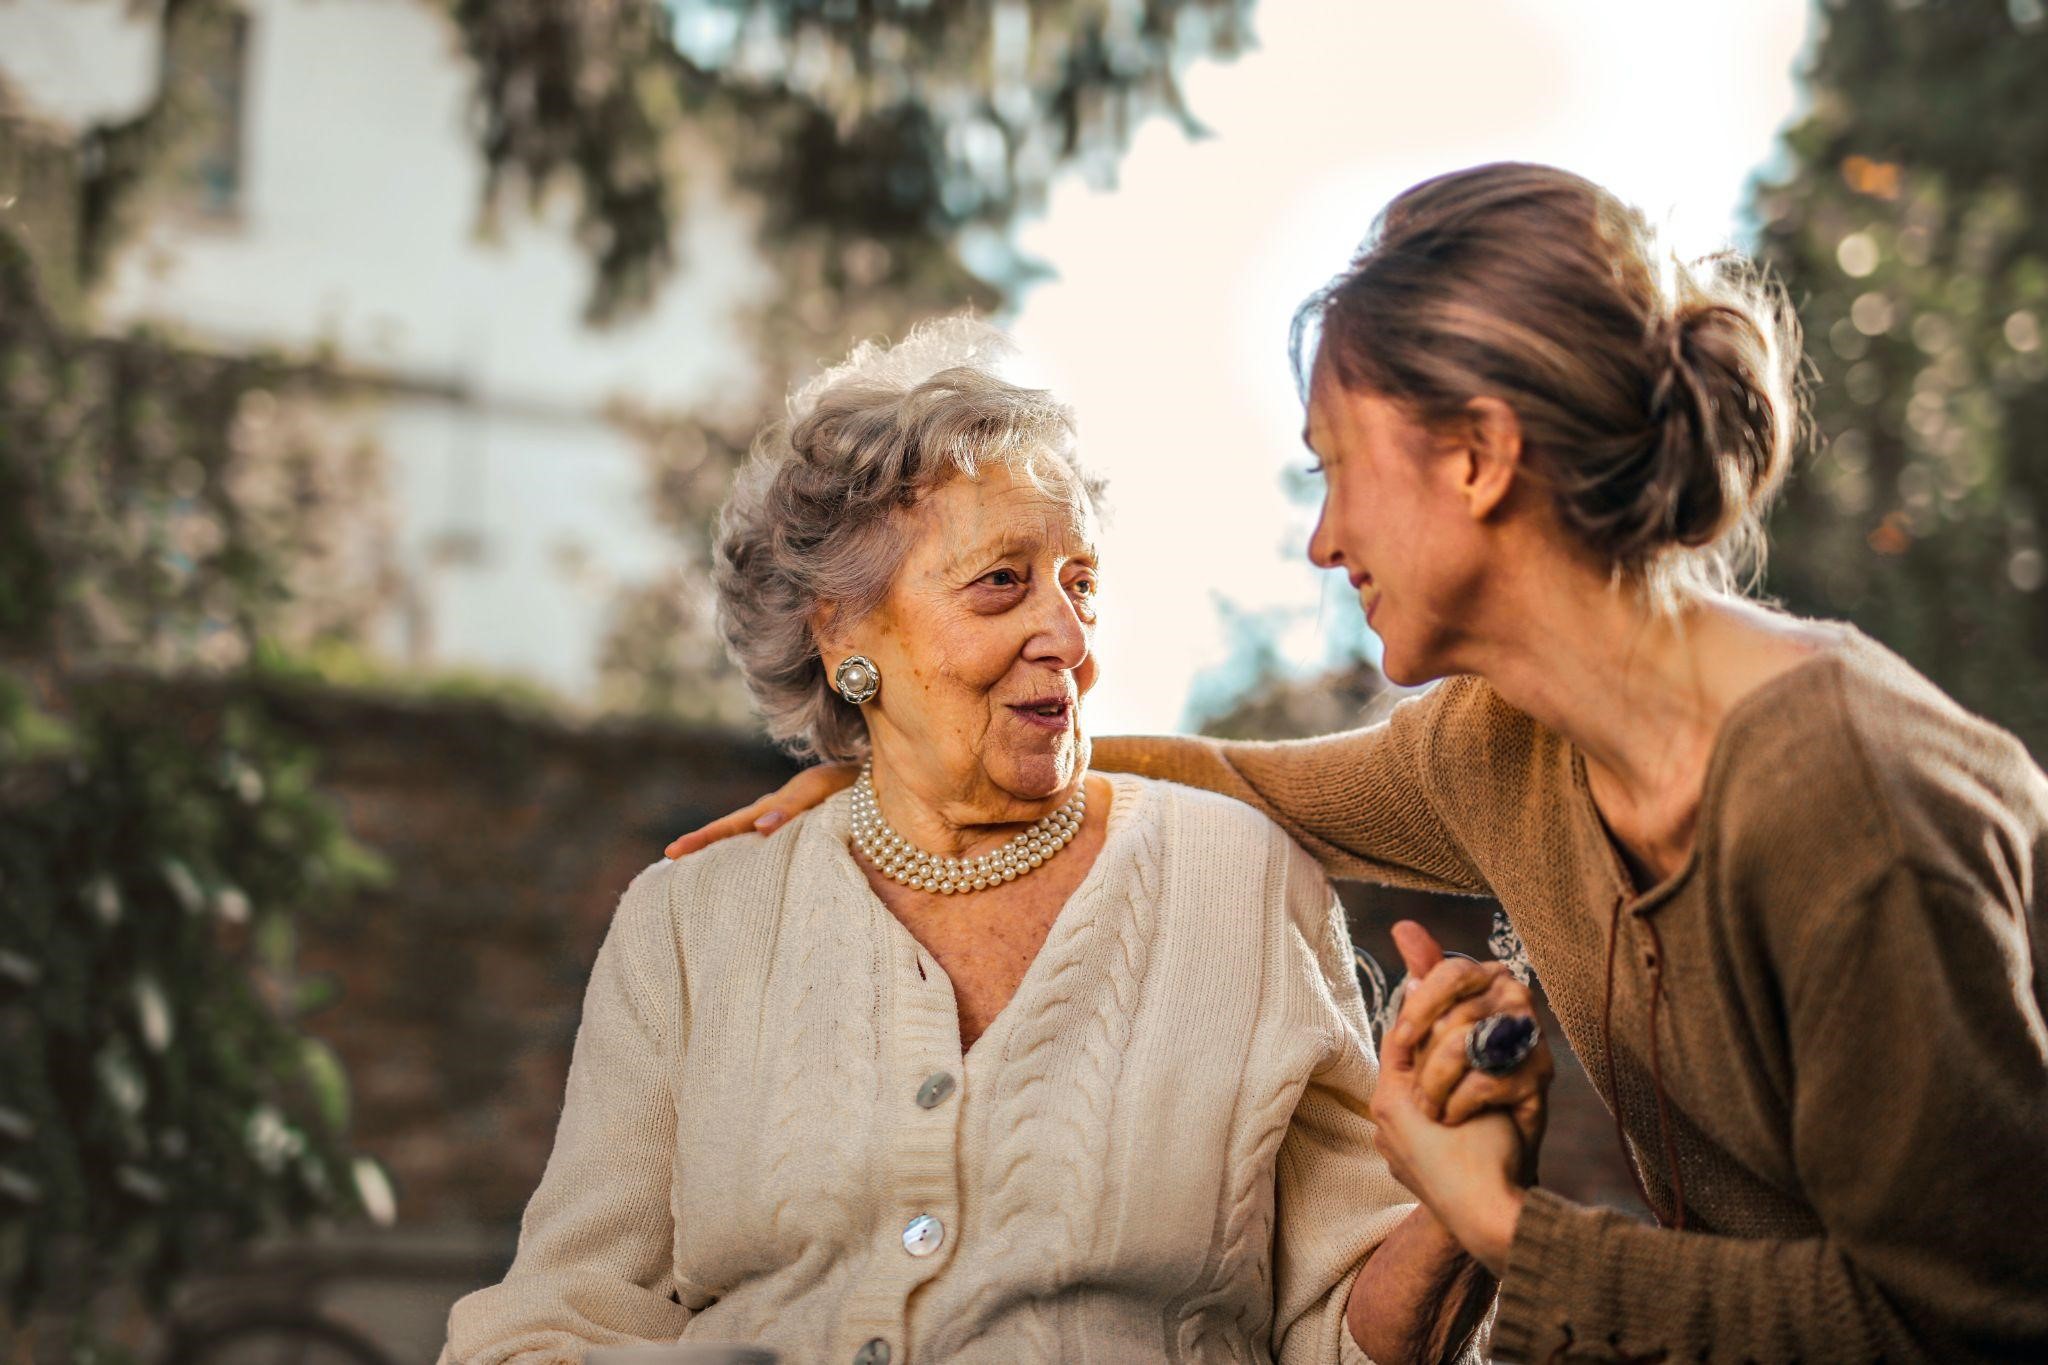 Hire an On-demand Senior Caregiver